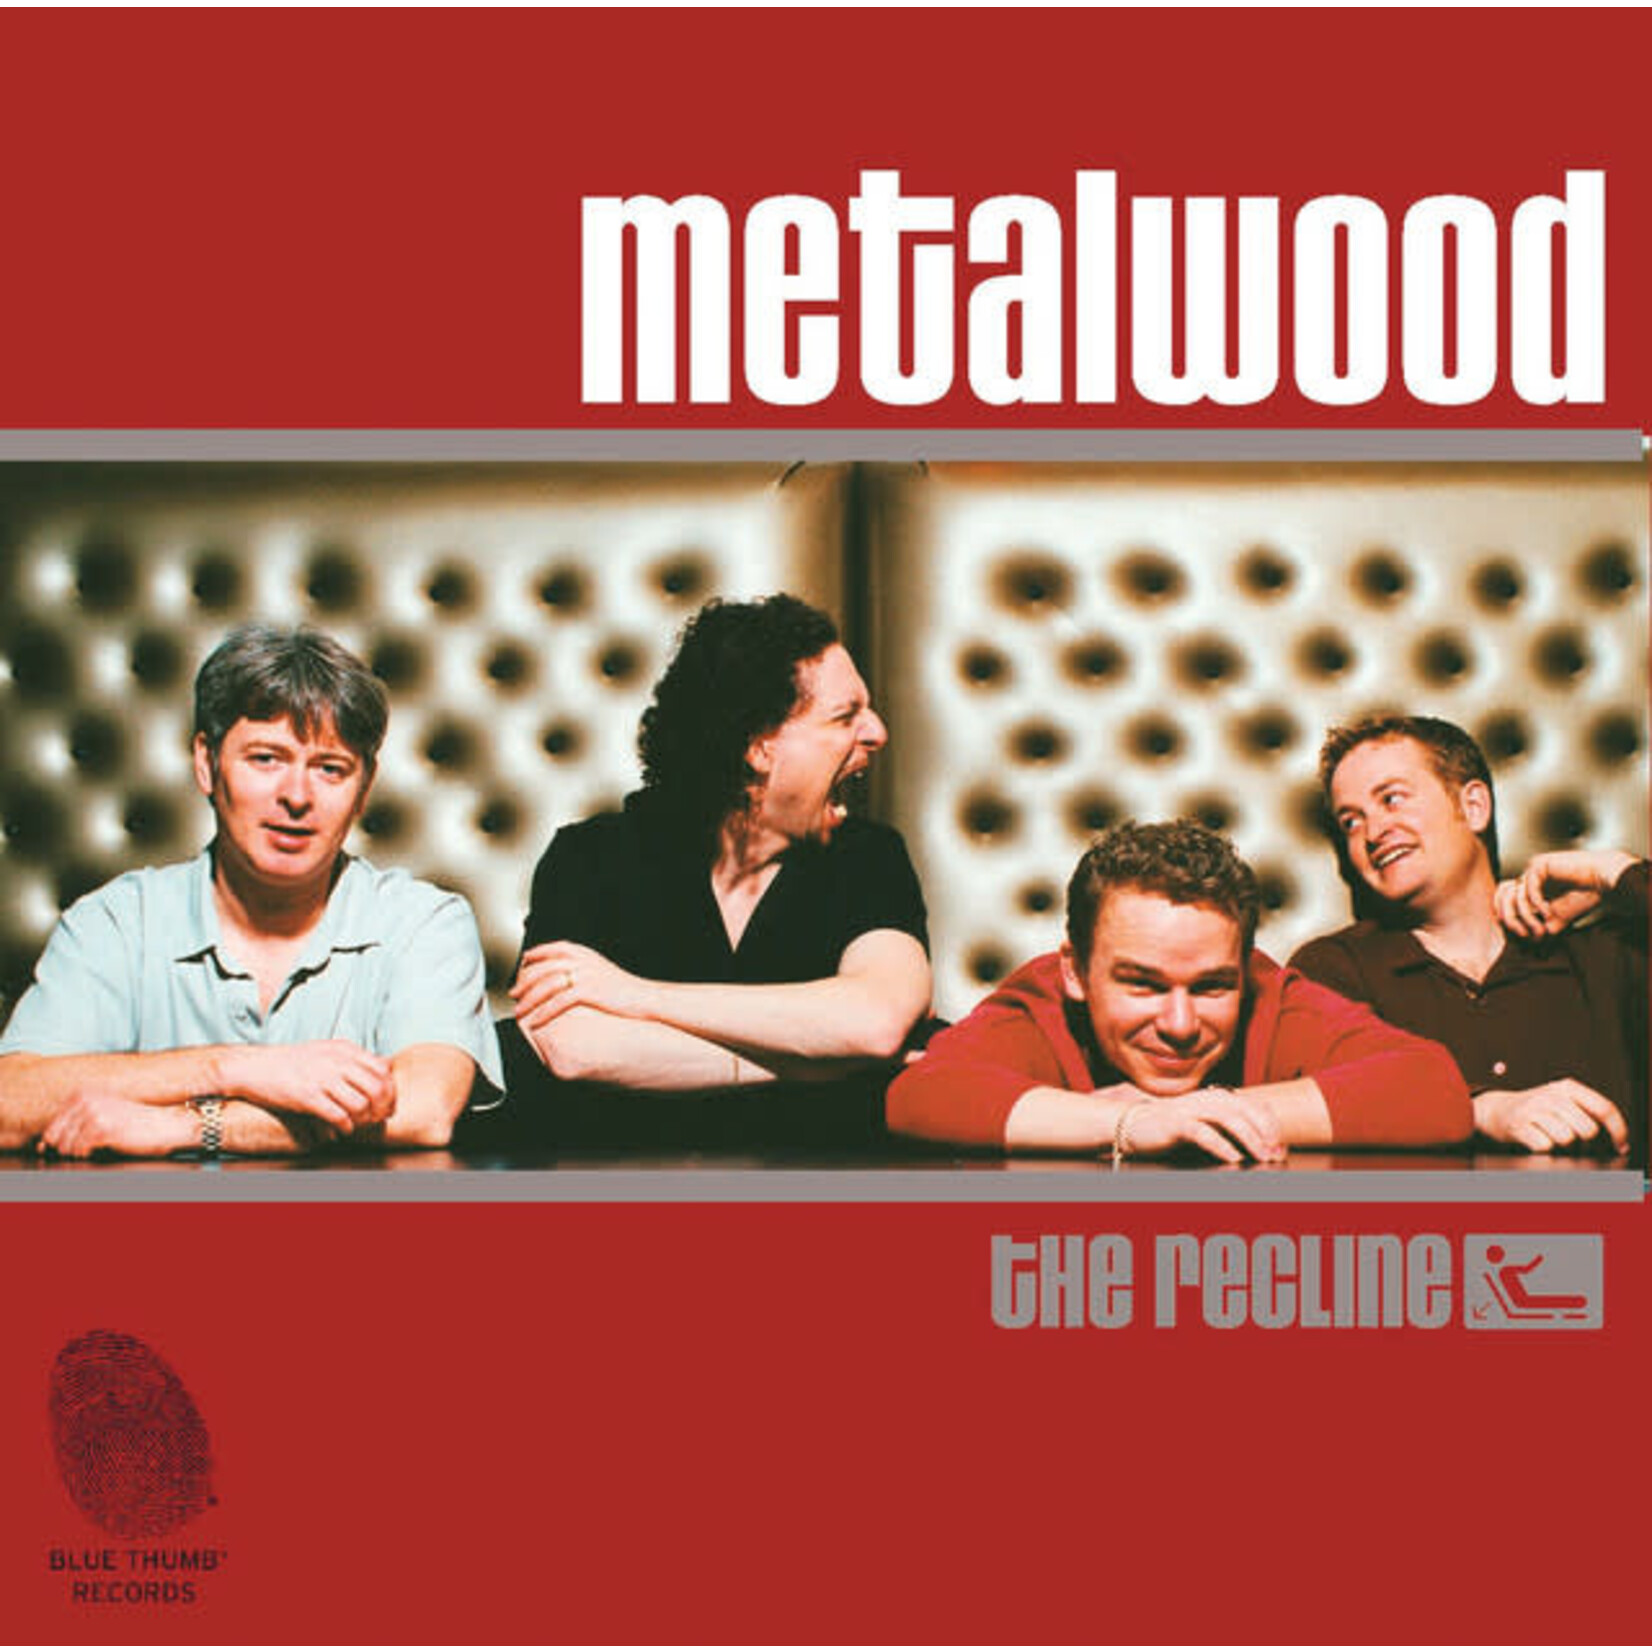 Metalwood - The Recline [USED CD]